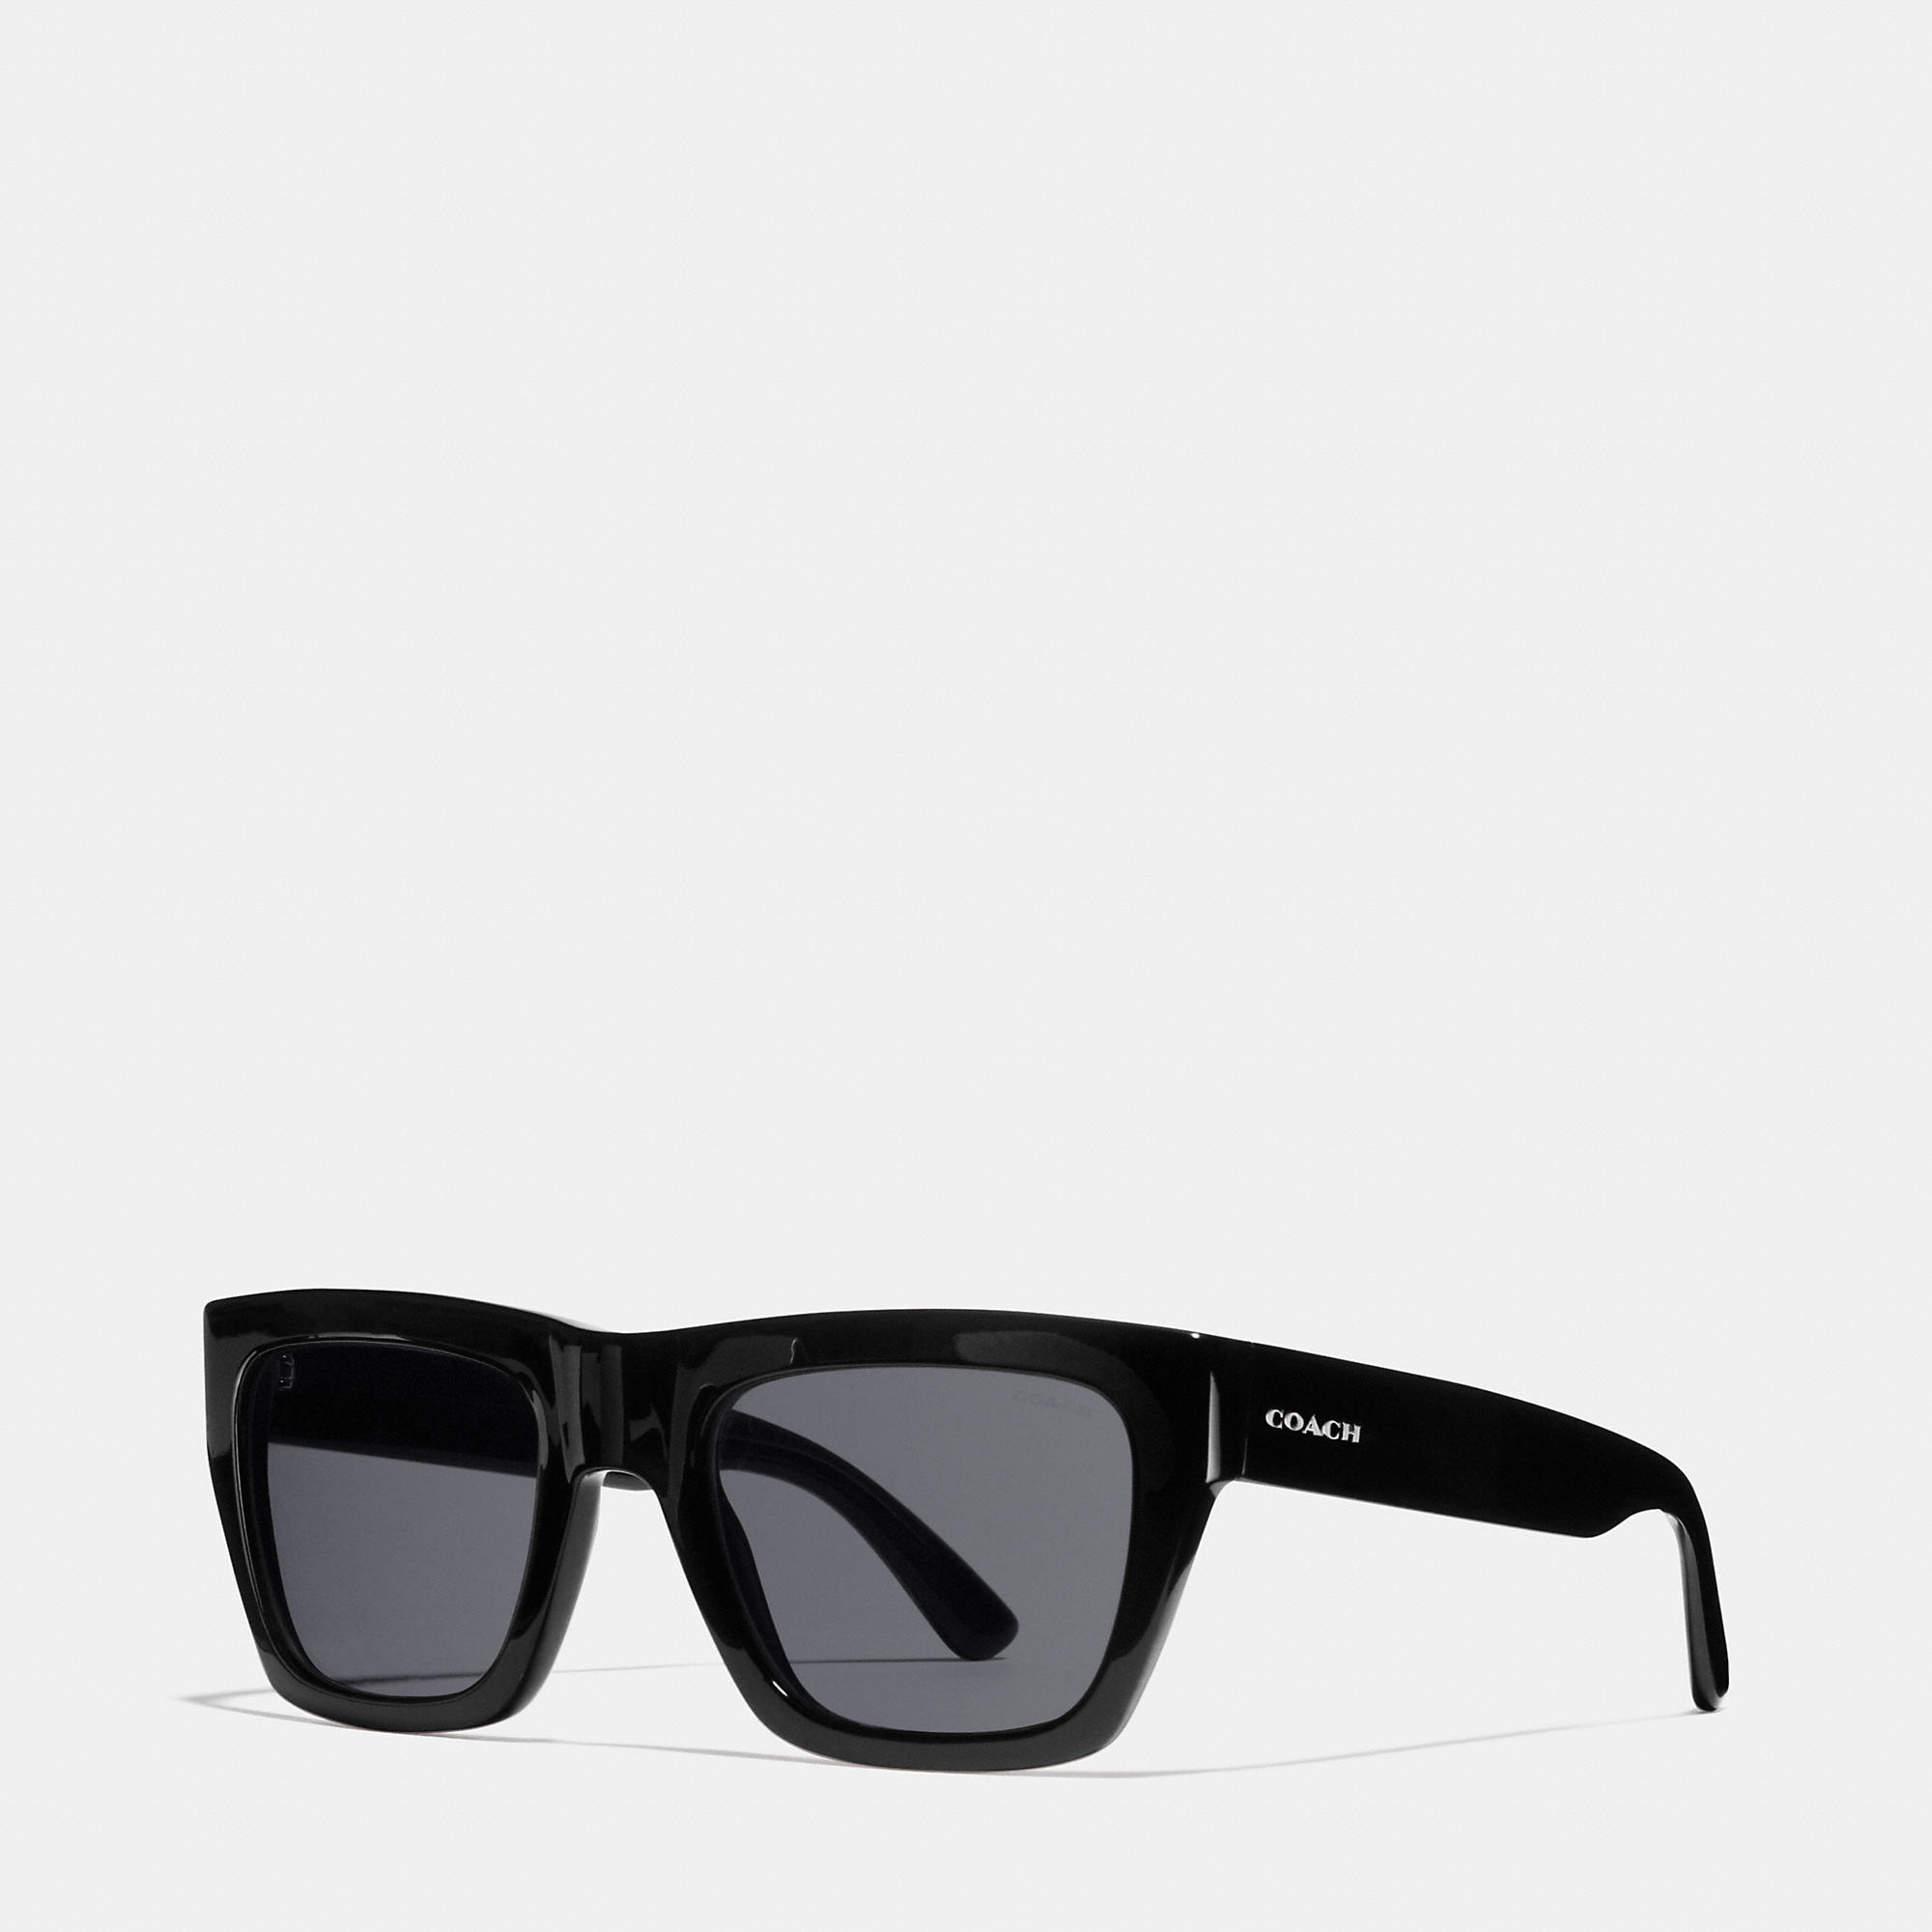 Lyst - Coach Commander Sunglasses in Black for Men